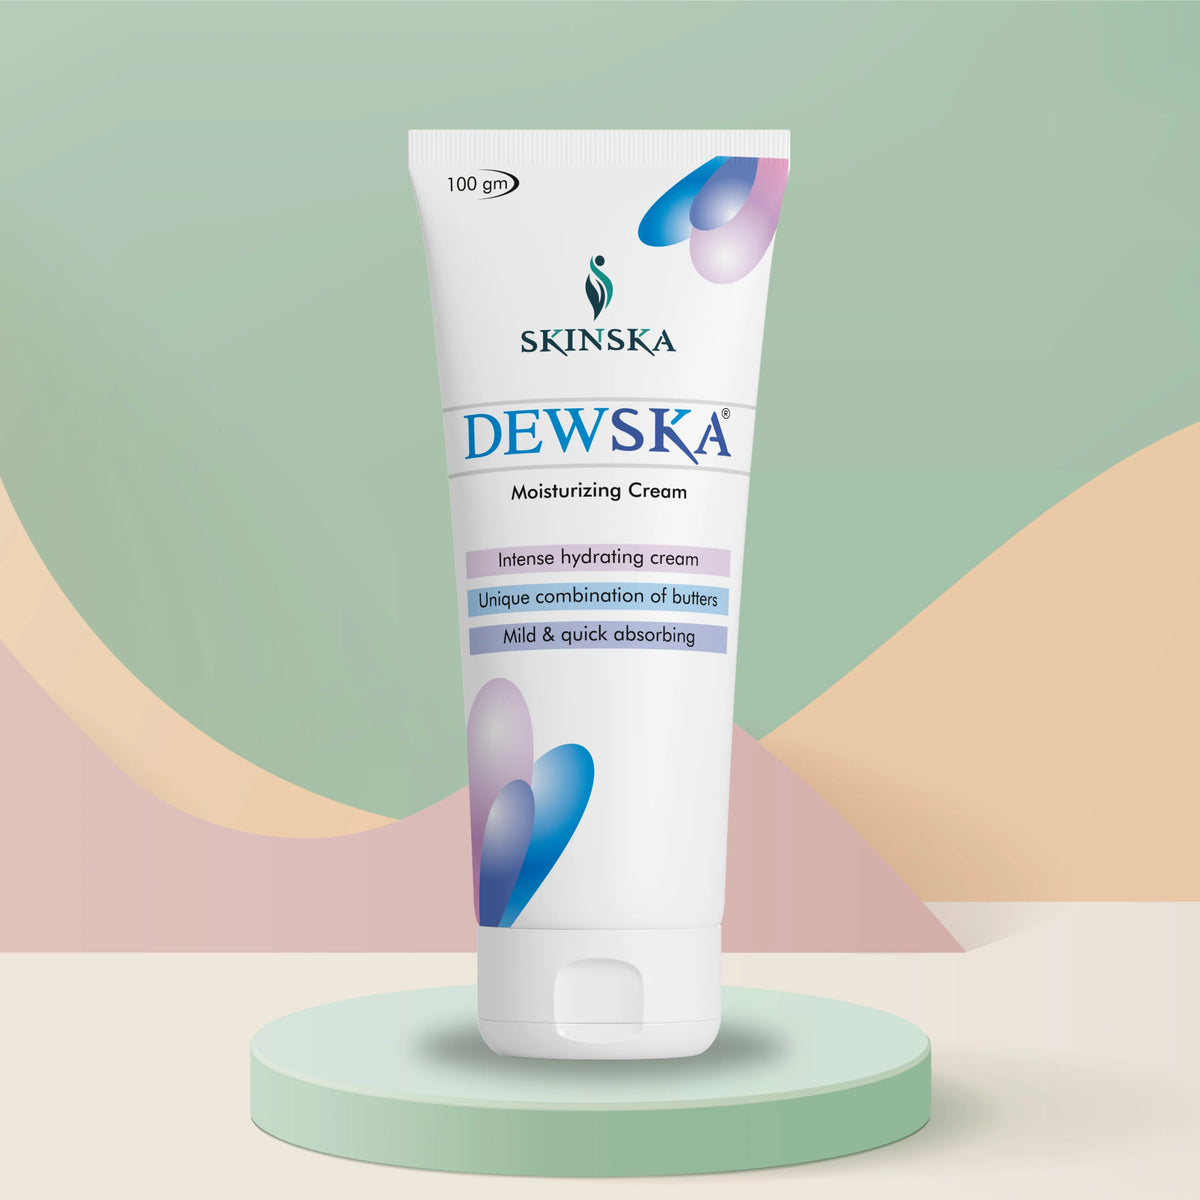 Dewska moisturising cream  with cocoa butter, shea butter, vitamin E and aloe vera extracts  for the best face moisturiser